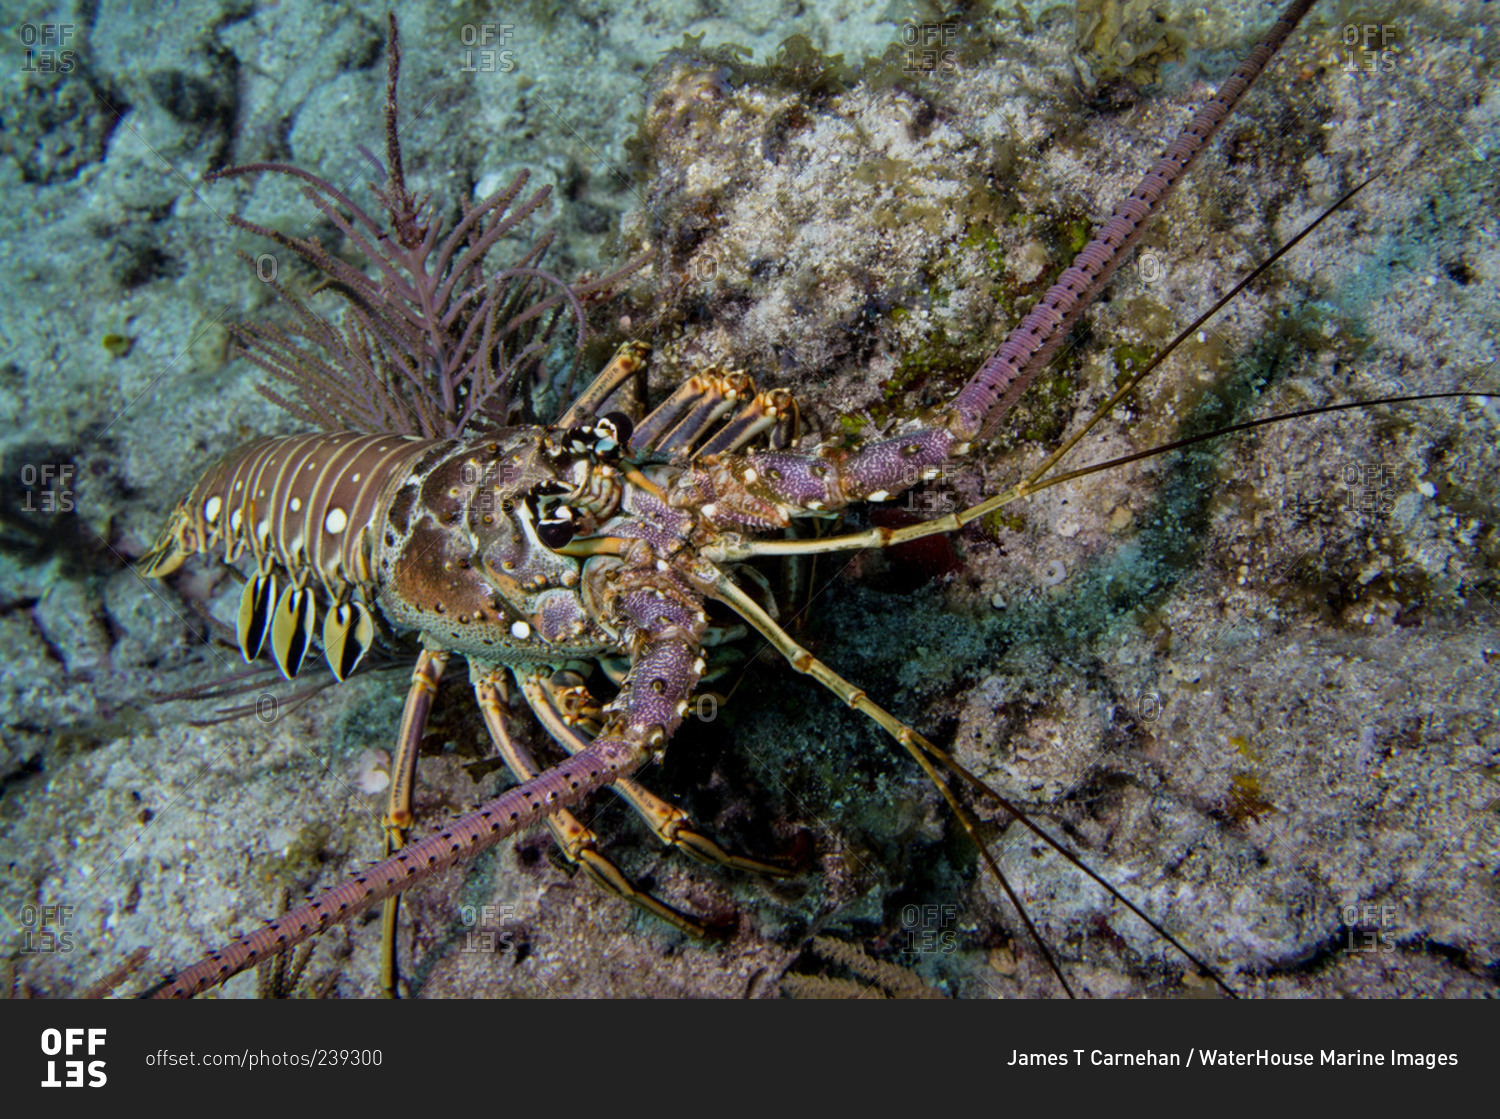 Spiny lobster scuttles across the ocean floor